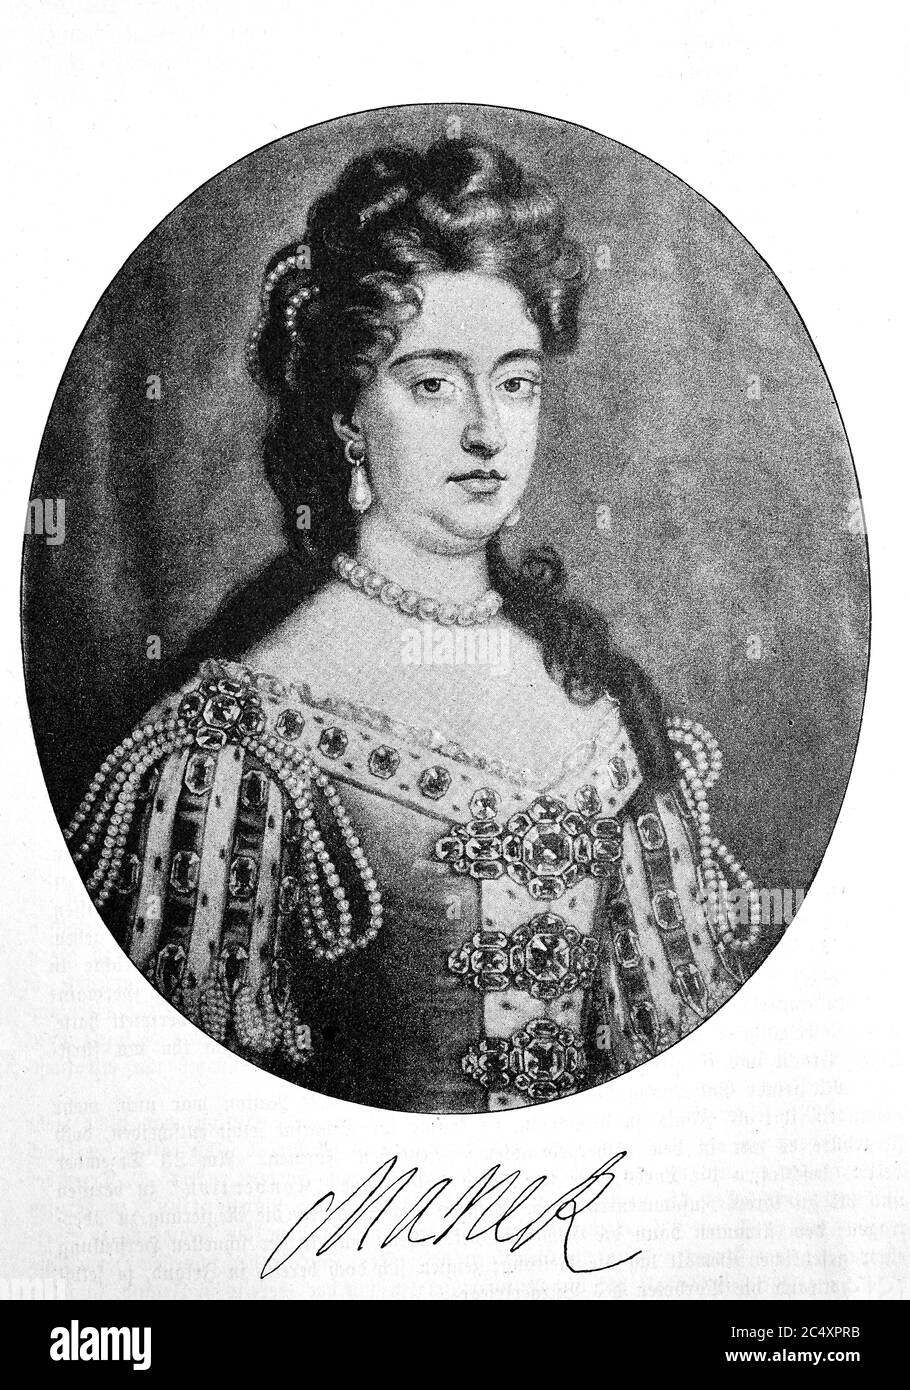 '. Maria II, anglaise Mary II (née le 30 avril 1662 † le 28 décembre 1694) était reine d'Angleterre, d'Écosse et d'Irlande / Maria II, englisch Mary II (* 30. Avril 1662 ; † 28. Dezember 1694), War Koenigin von England, Schottland und Irland' Banque D'Images